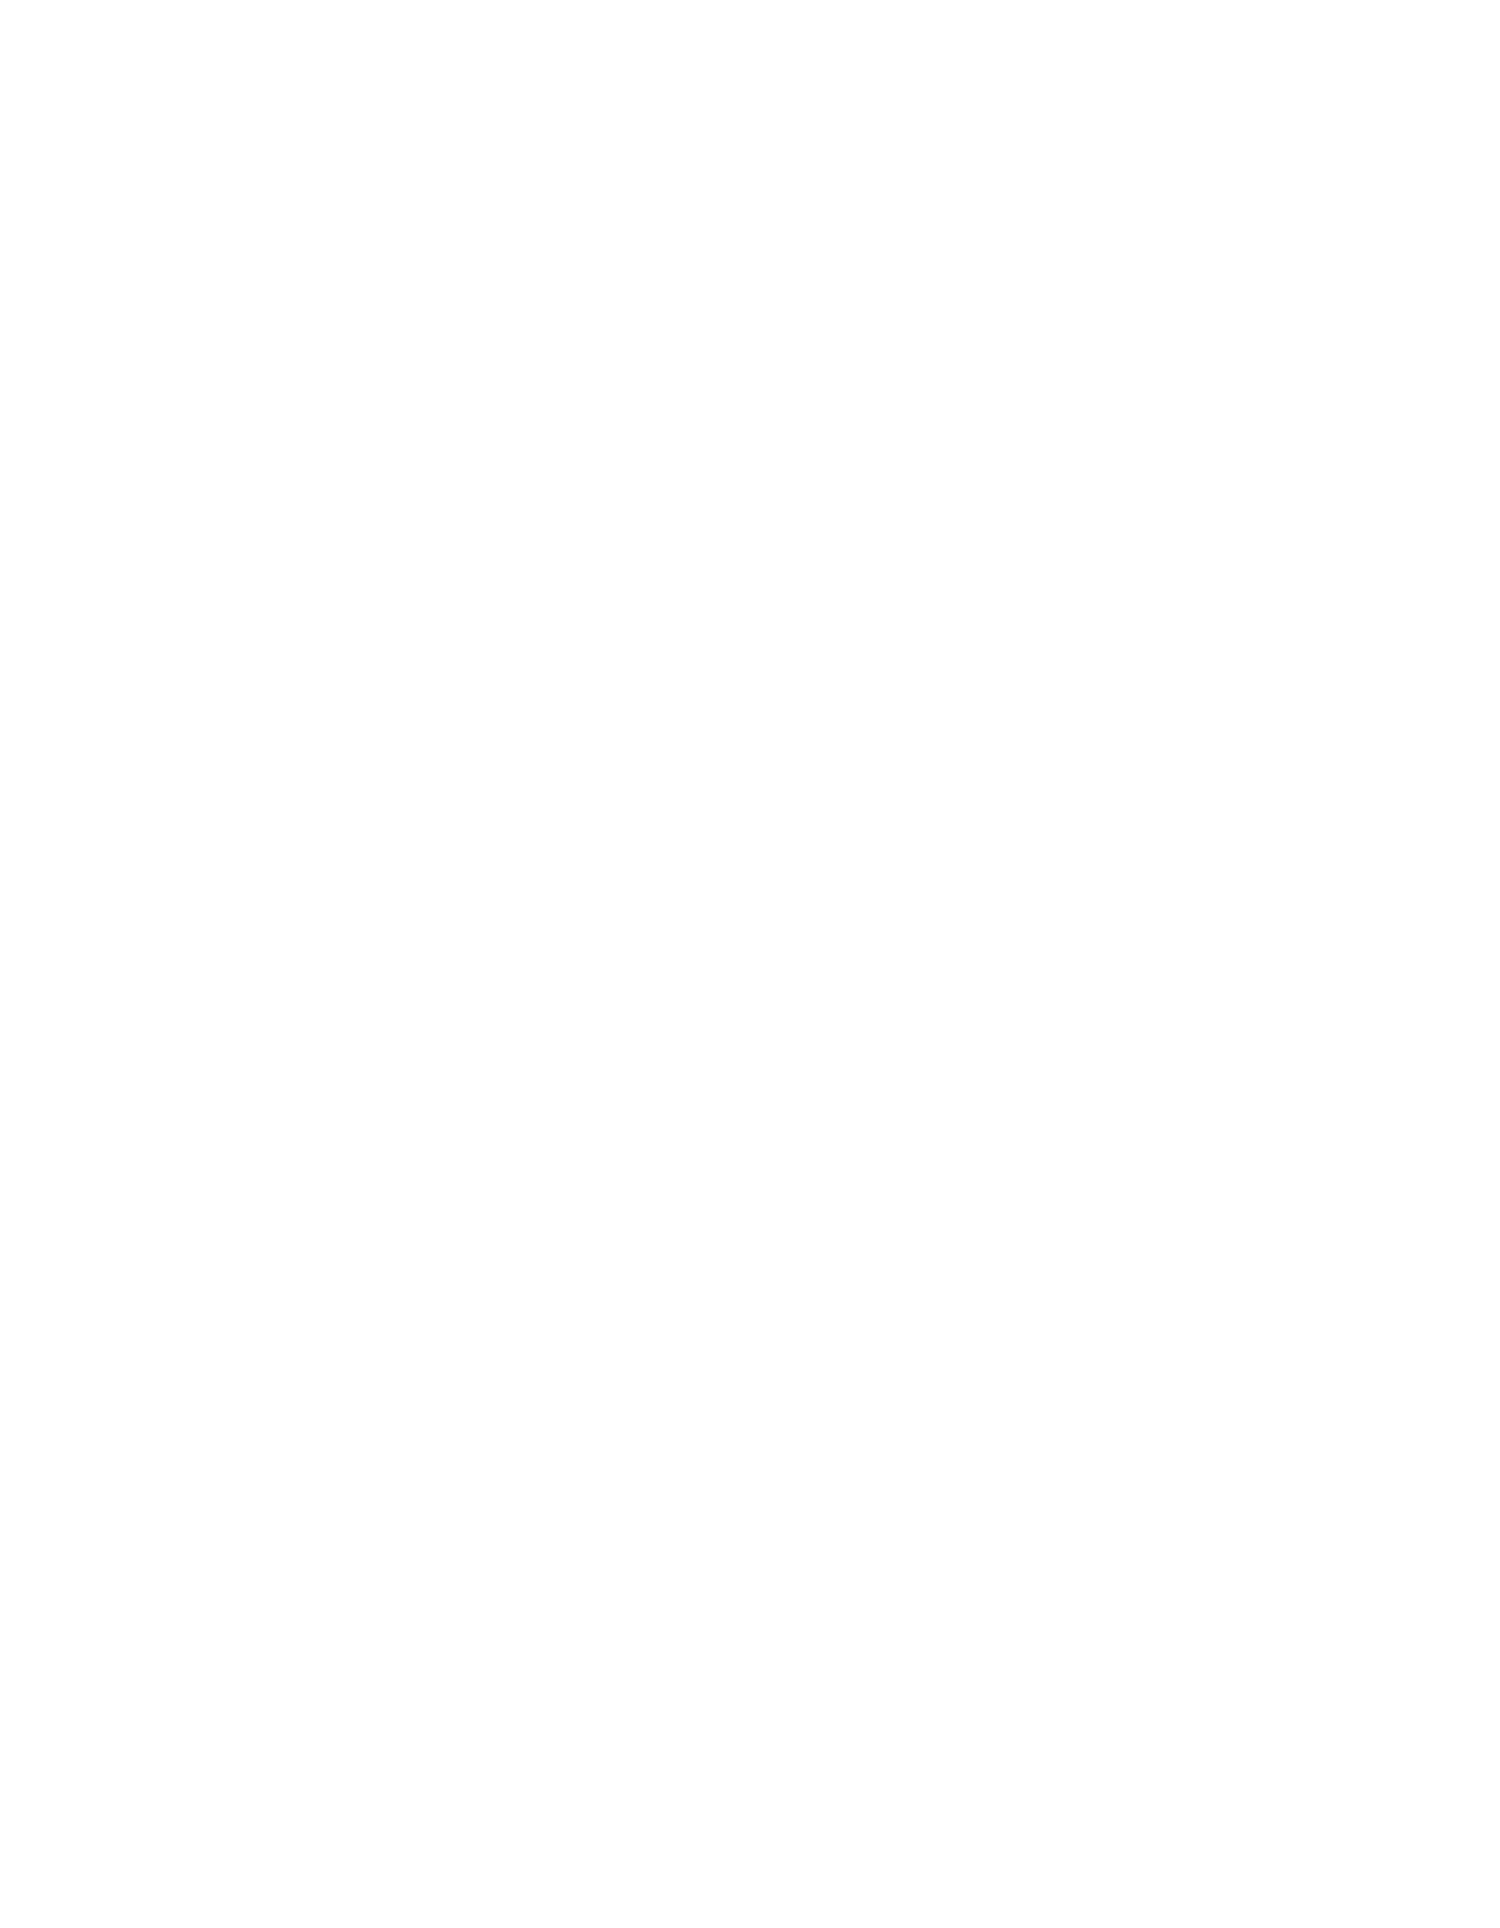 Bread &amp; Roses